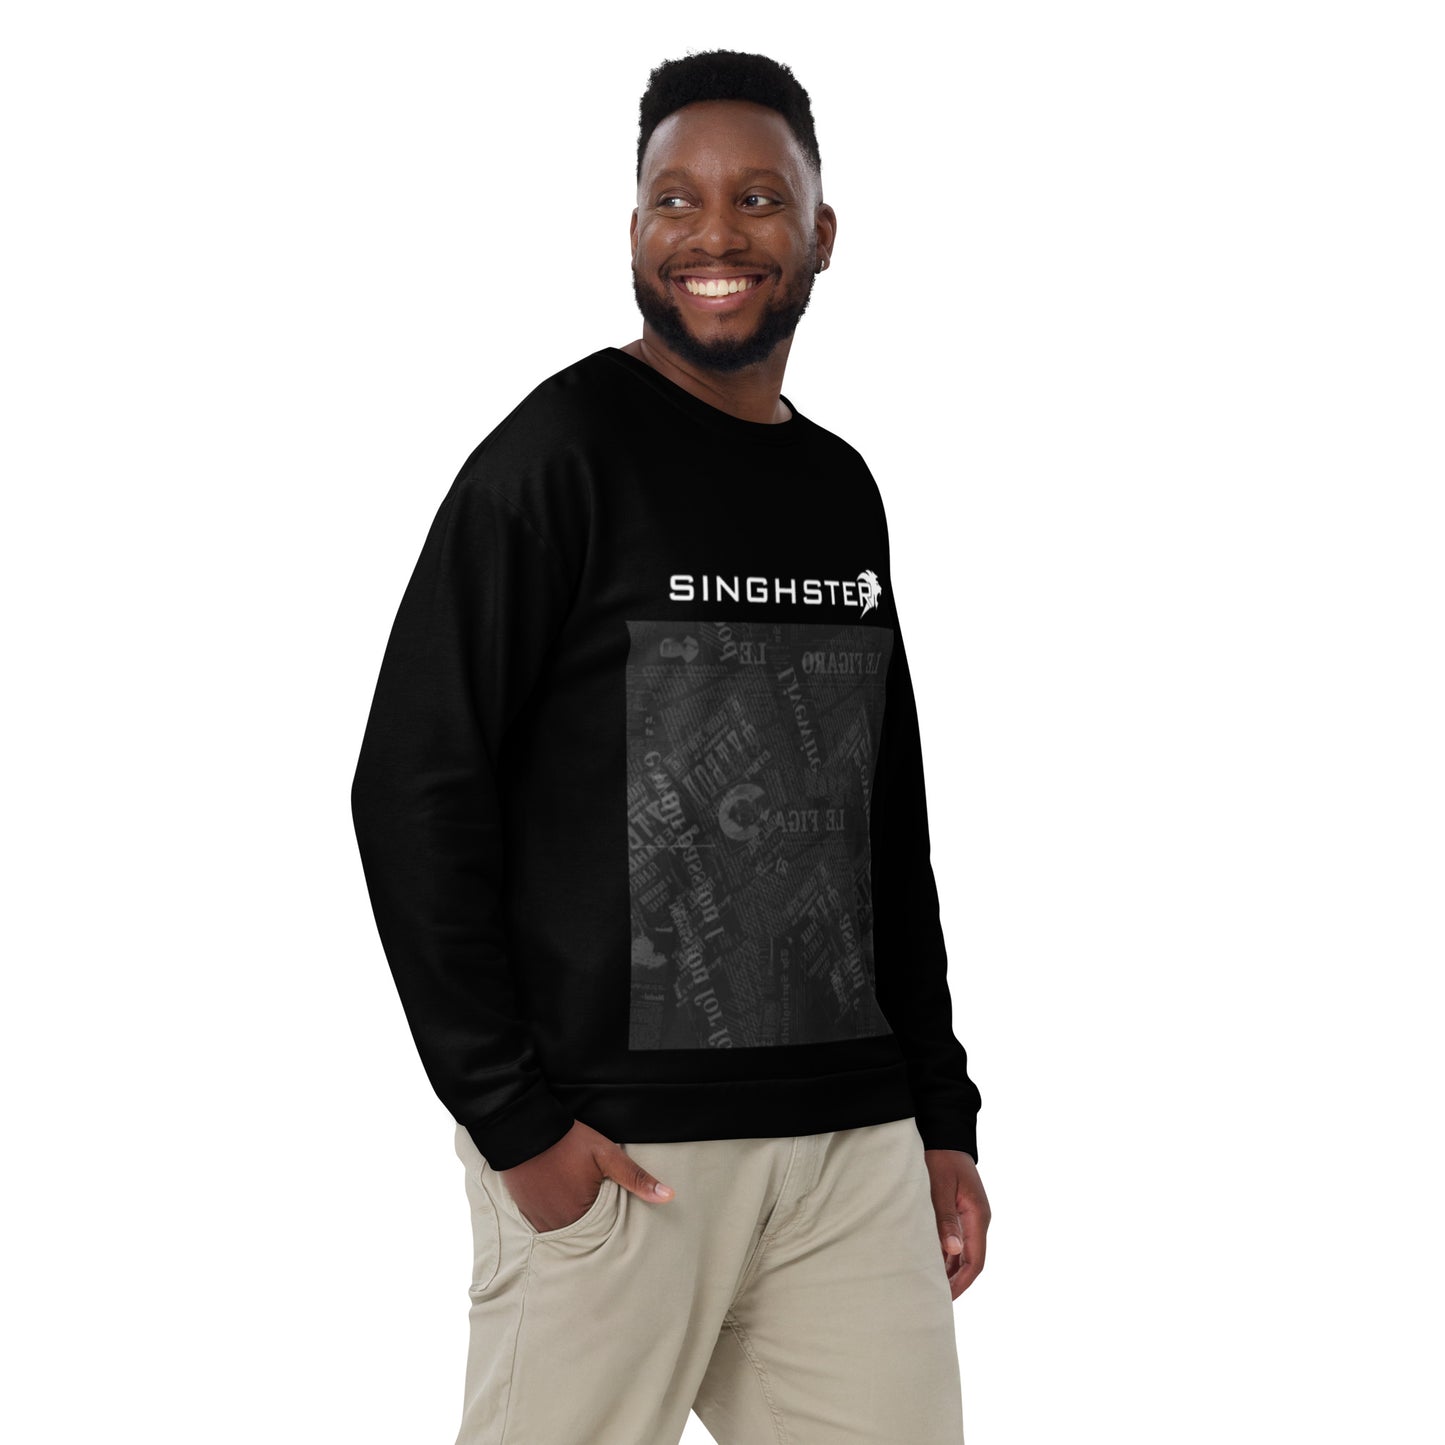 Hellomart Black Sweatshirt